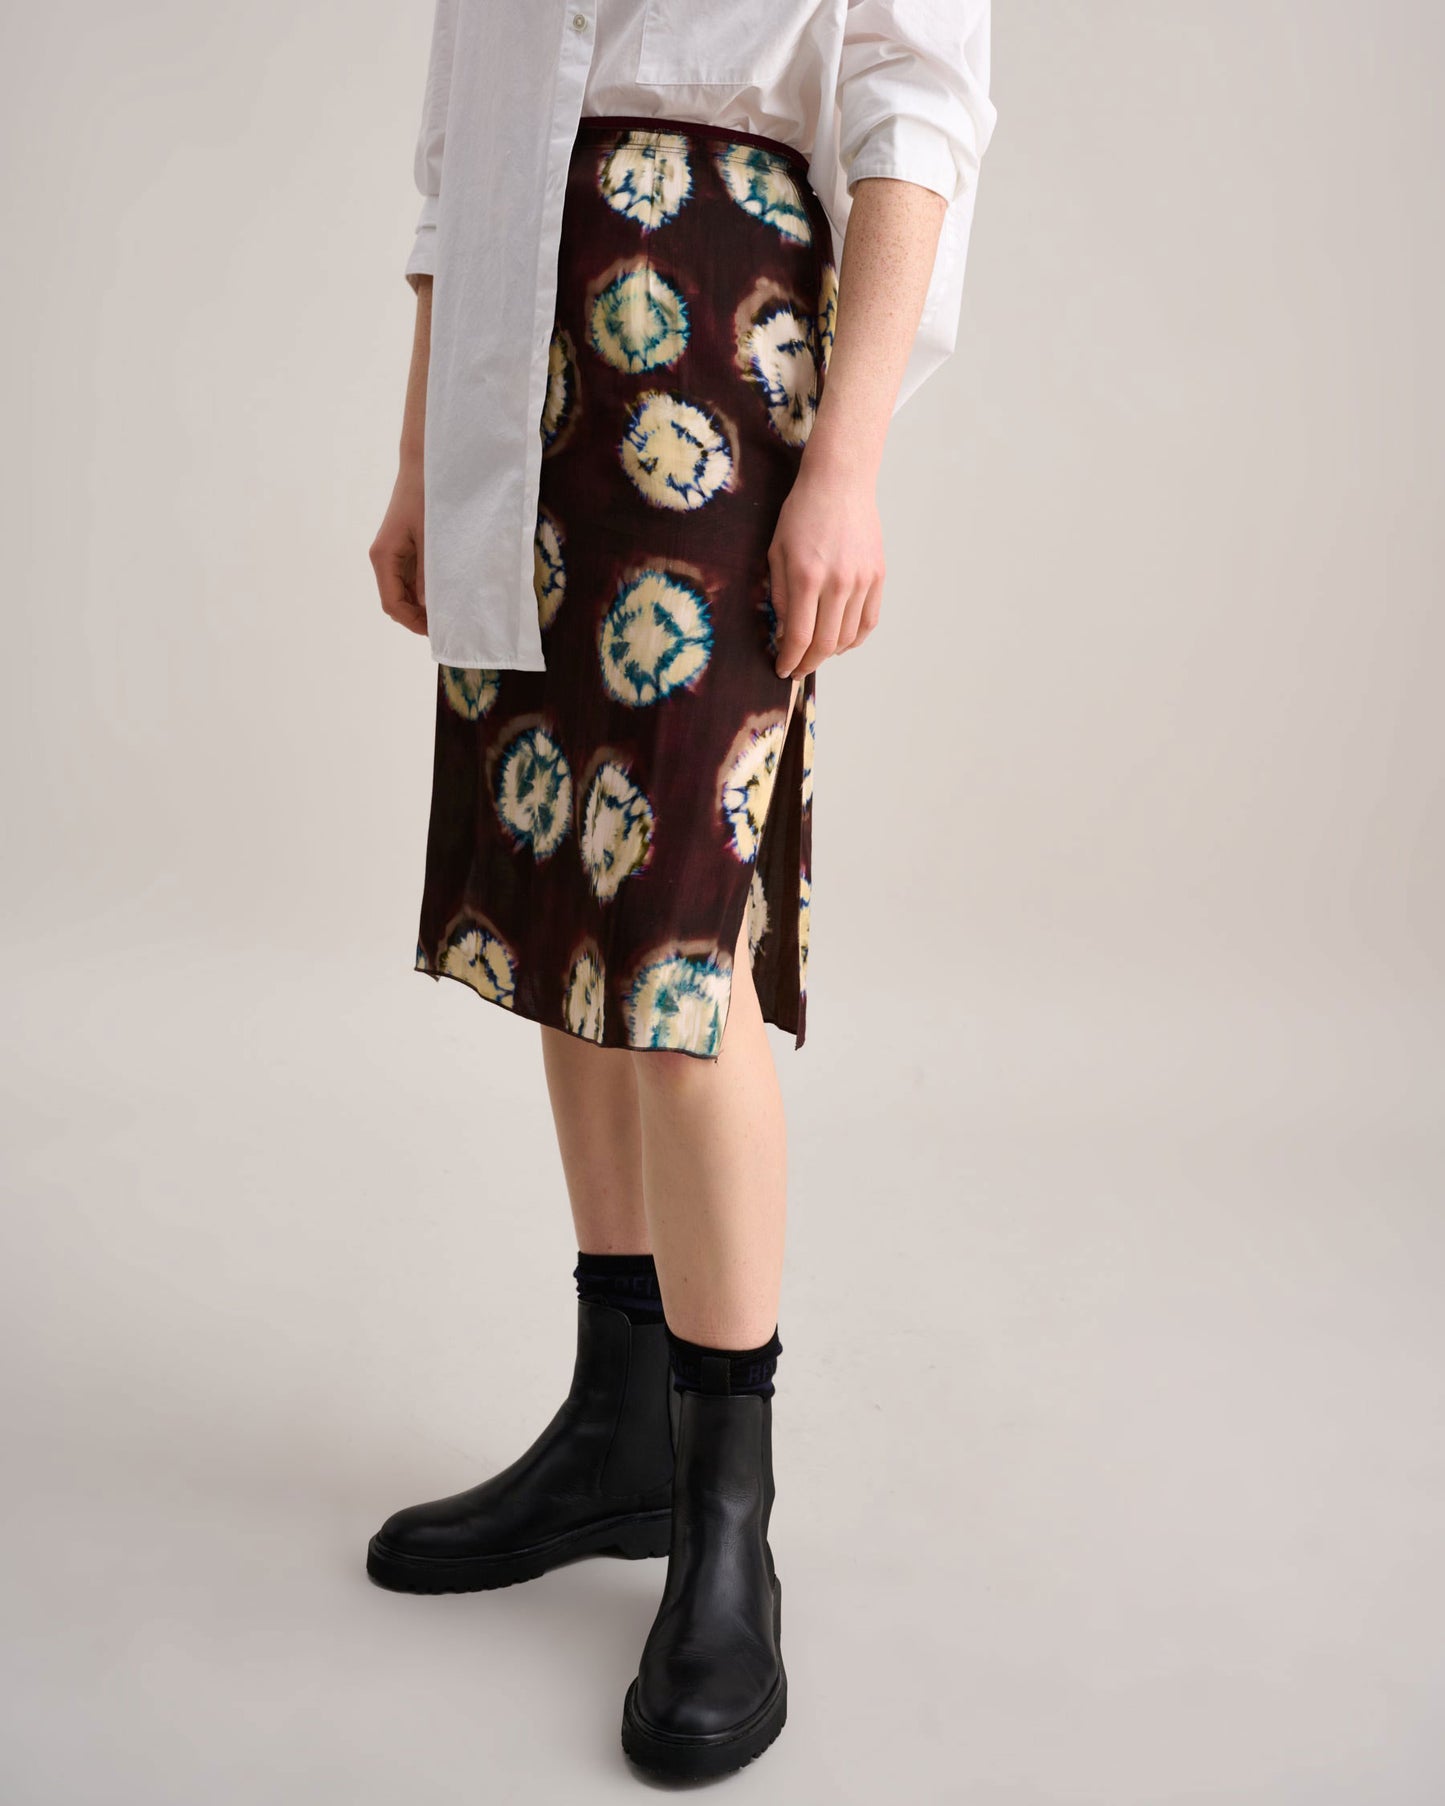 BELLEROSE Texas Skirt in Tie Dye available at Lahn.shop